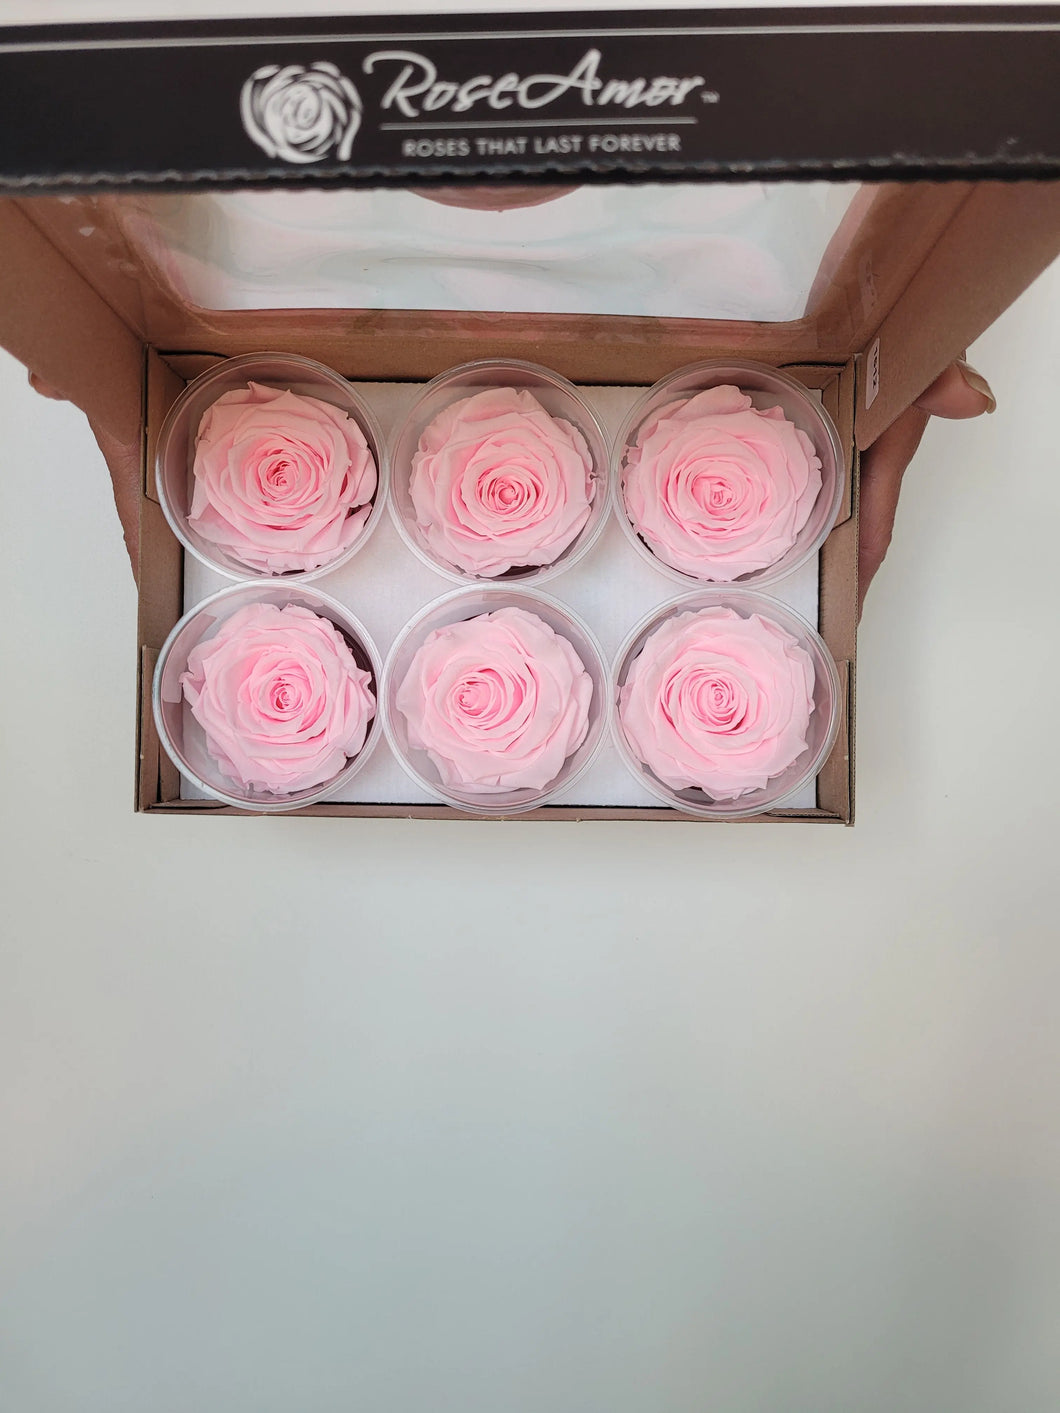 noscript-image-Preserved Rose Six Packs in Pink